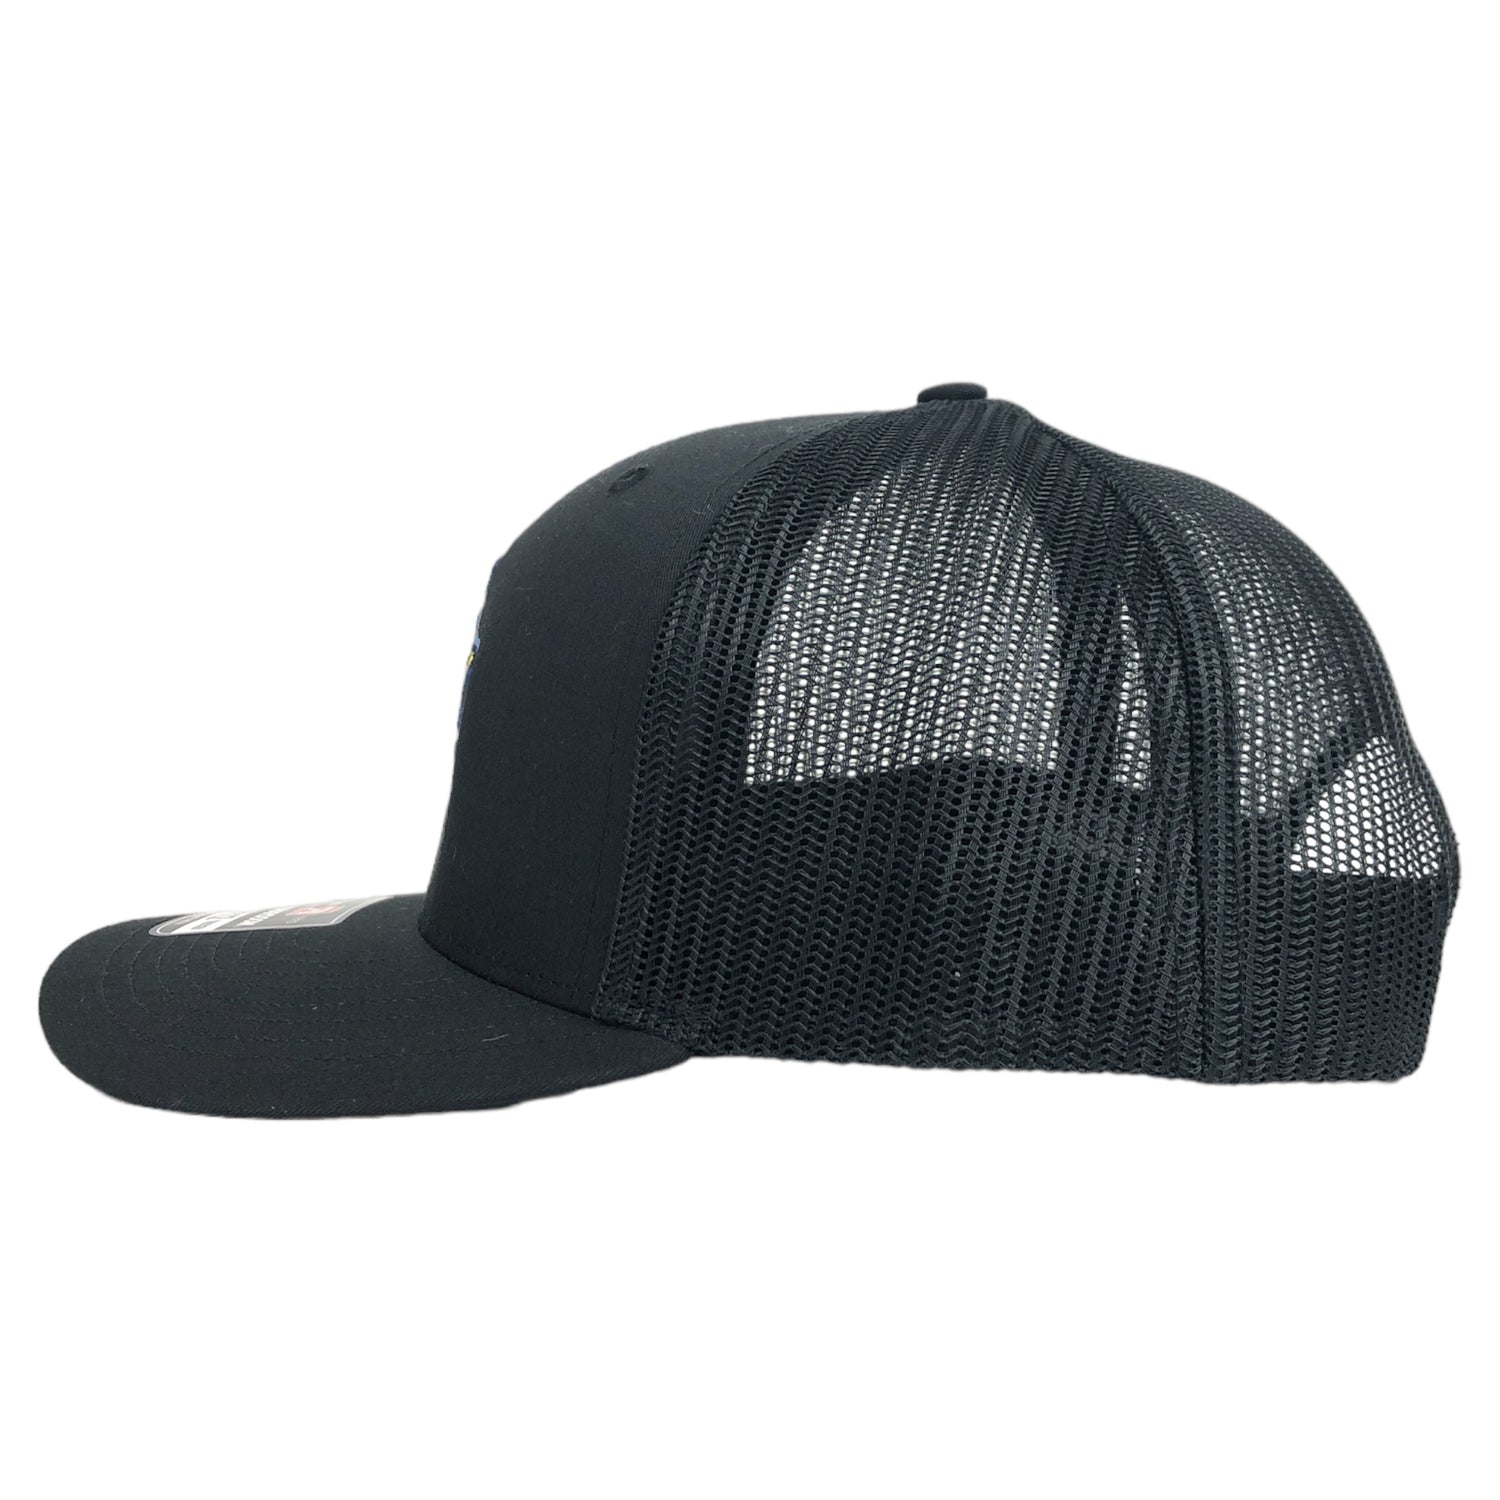 Side view of DubSea Fish Sticks Richardson all black adjustable trucker hat.